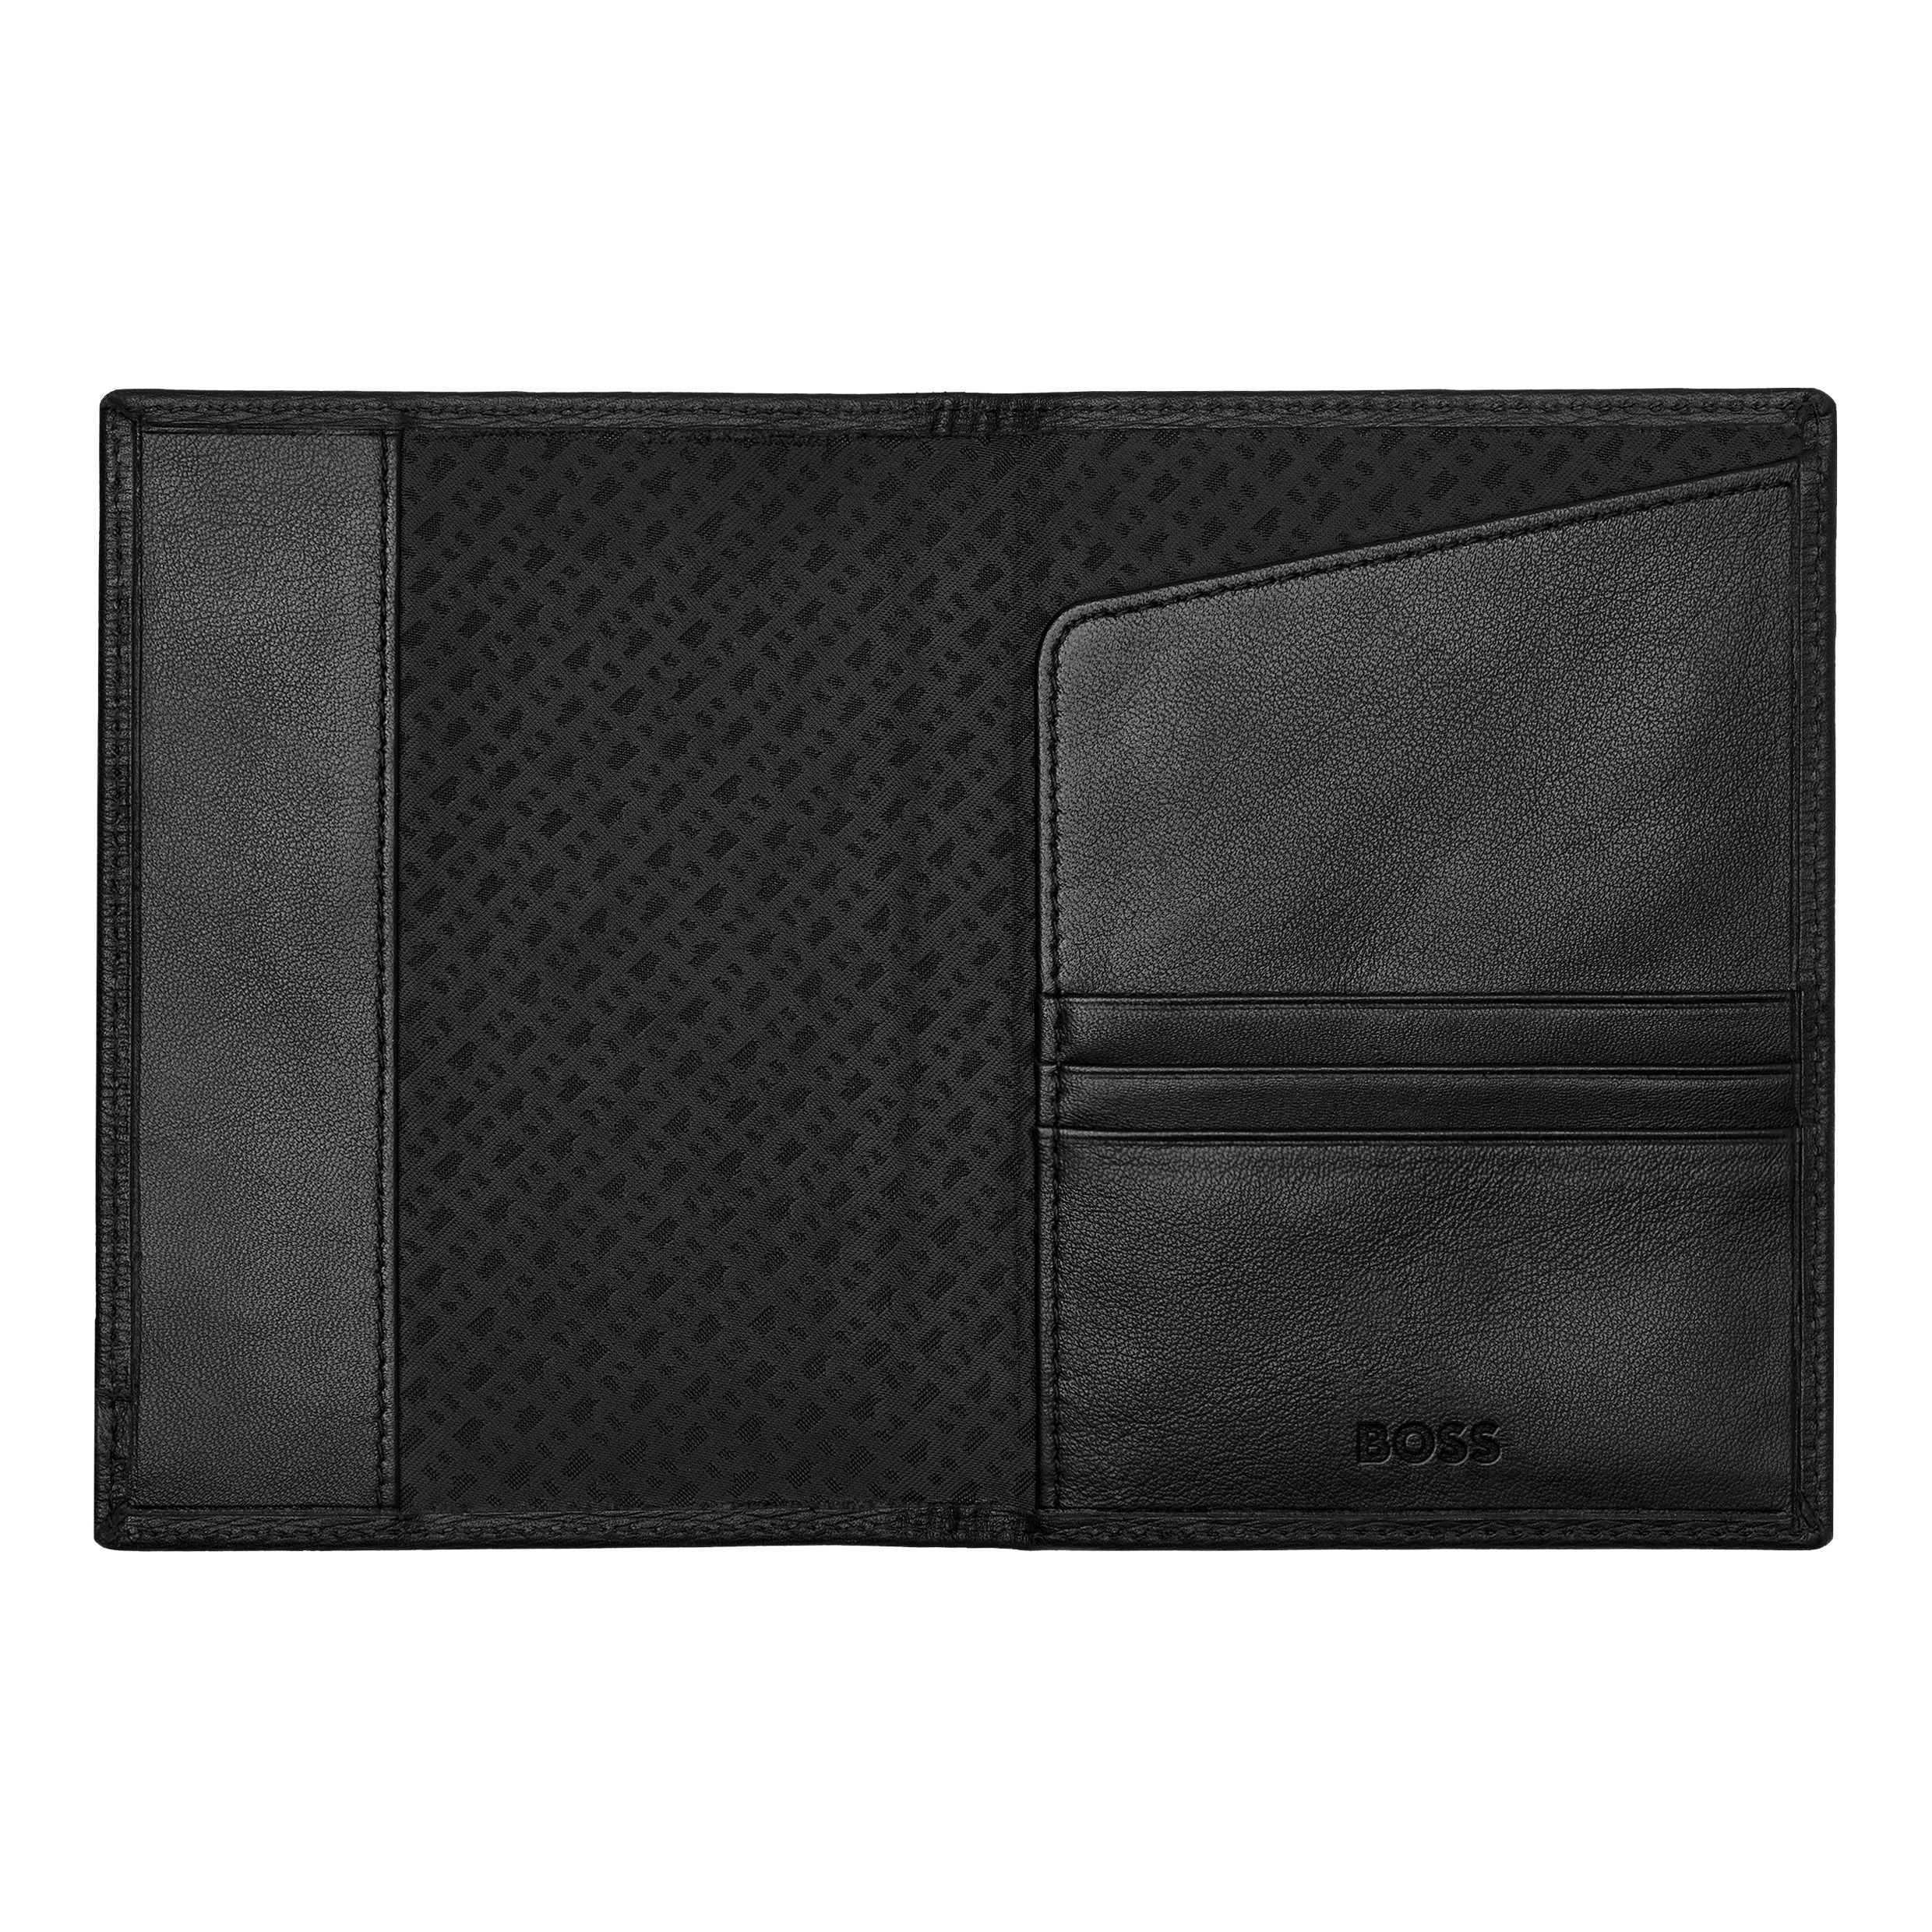 Passport Holder Iconic Black Leather